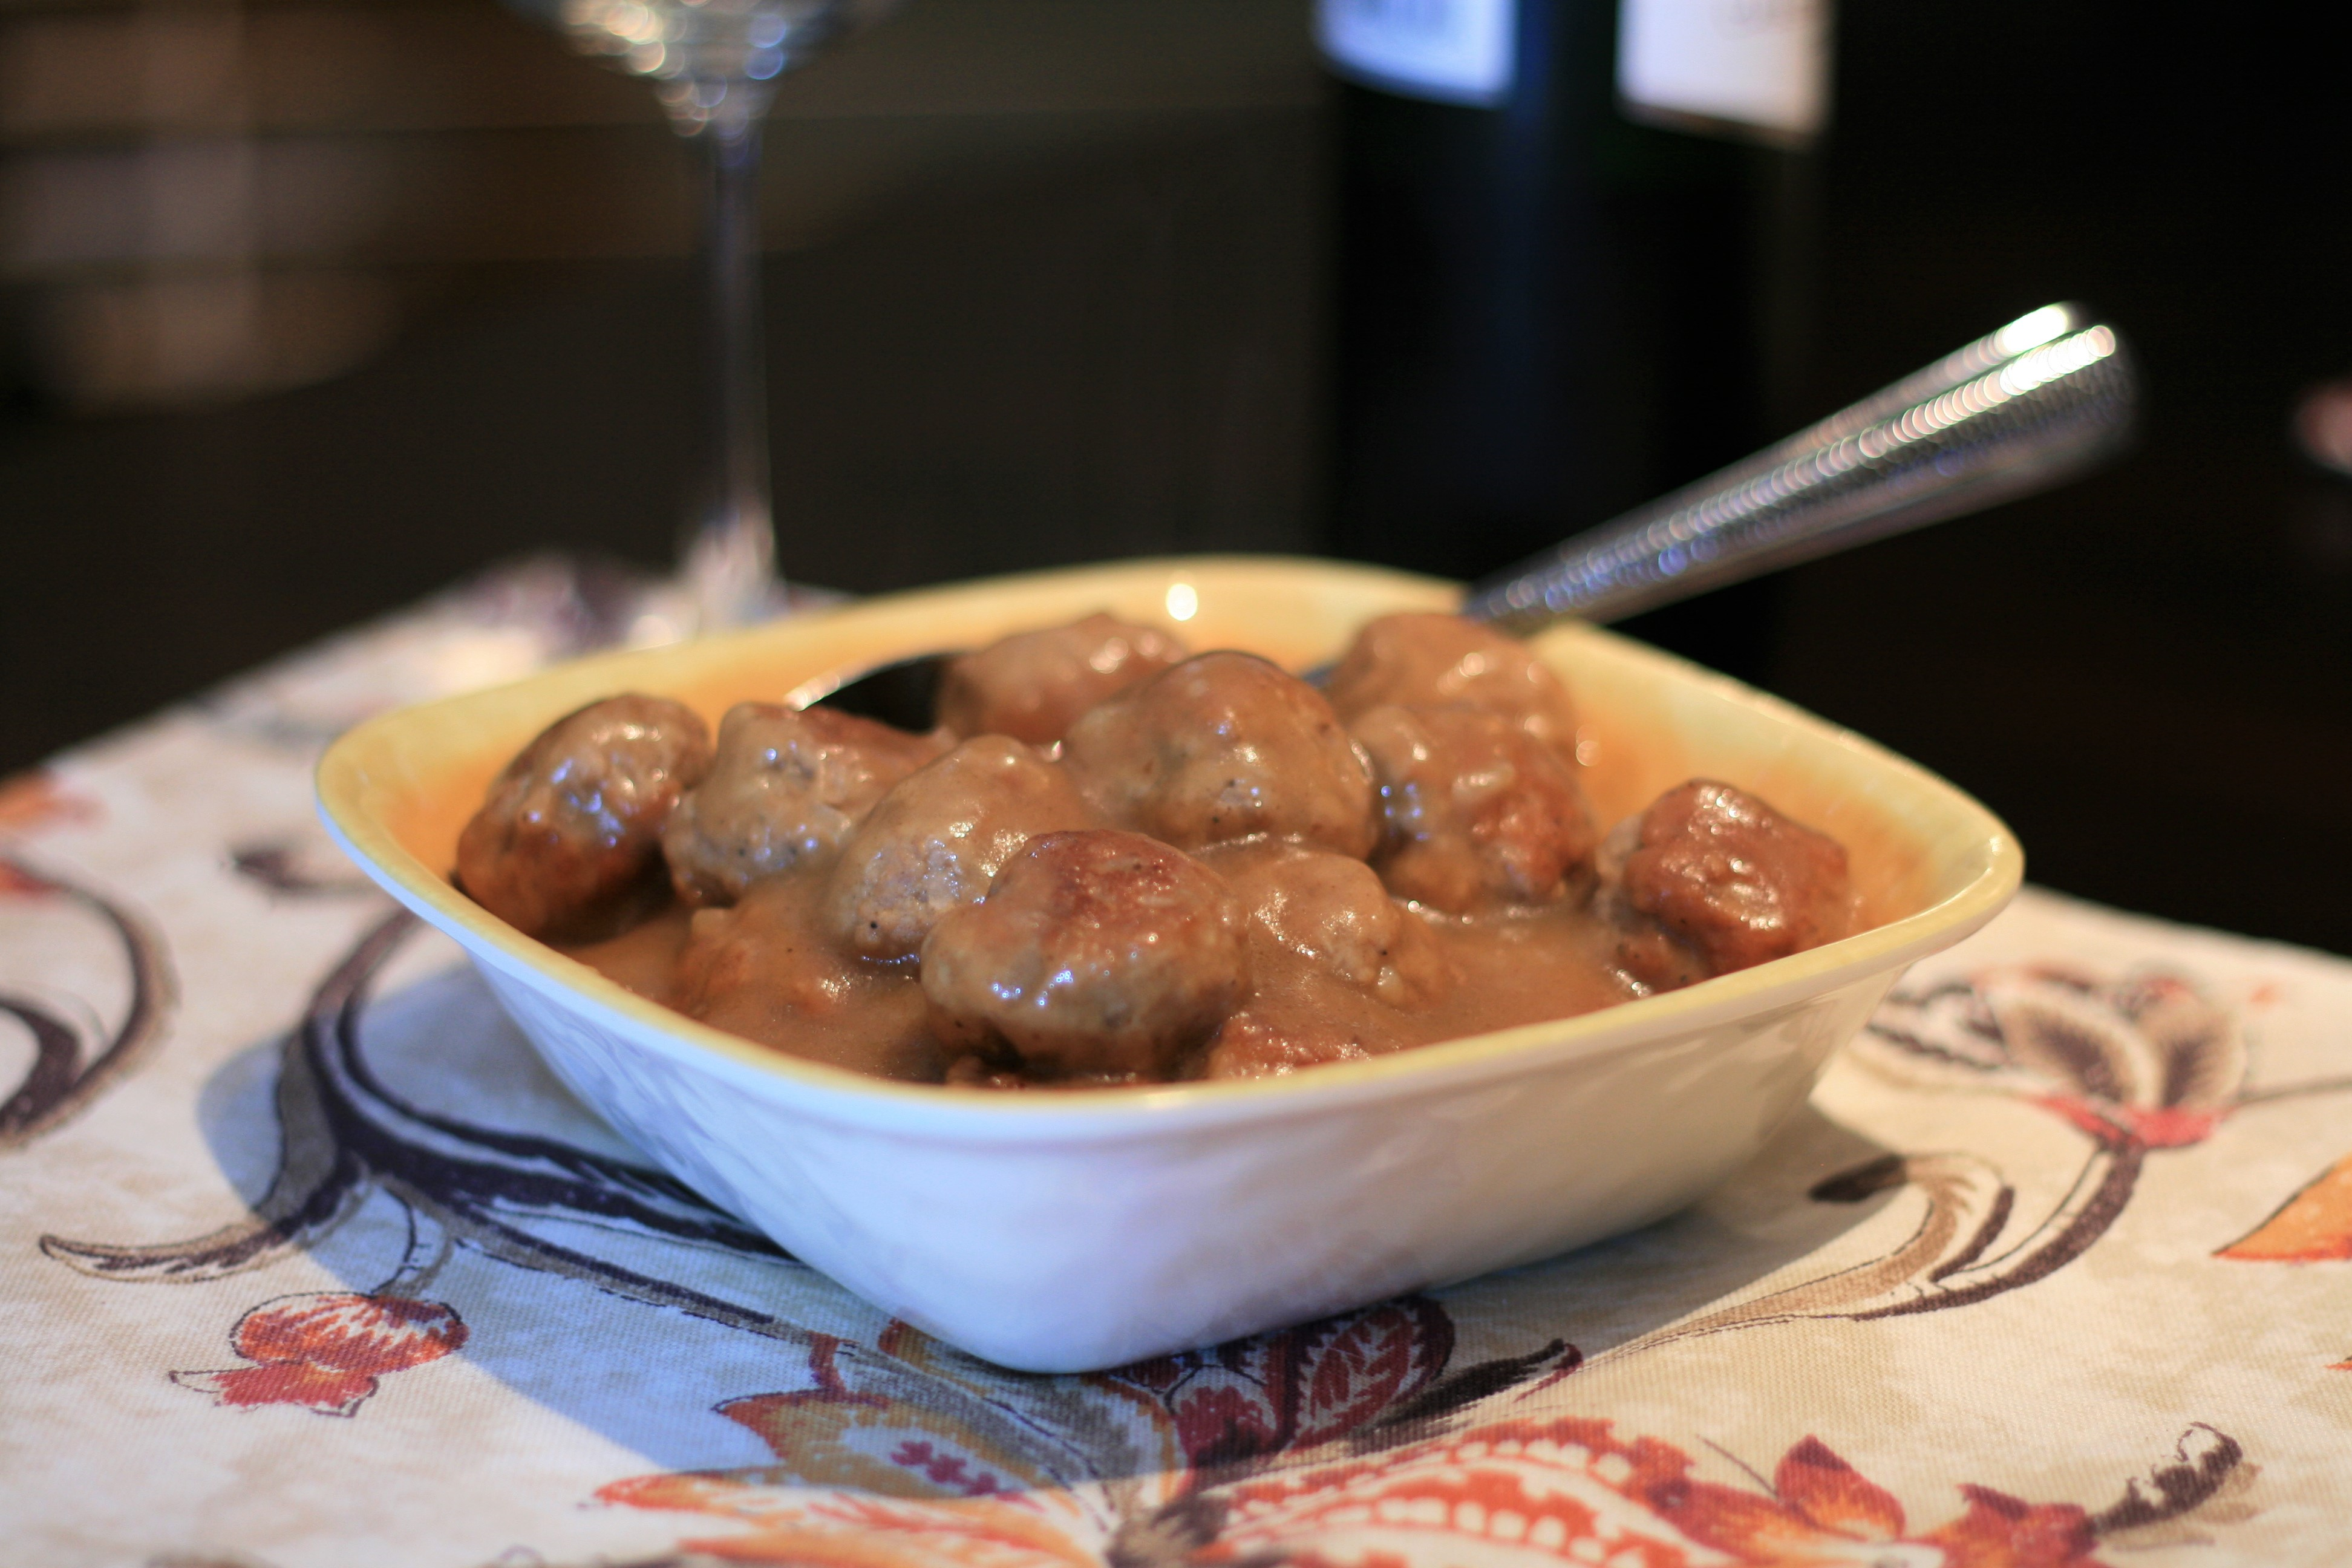 Ragout de Boulettes (Pork Meatball Stew)